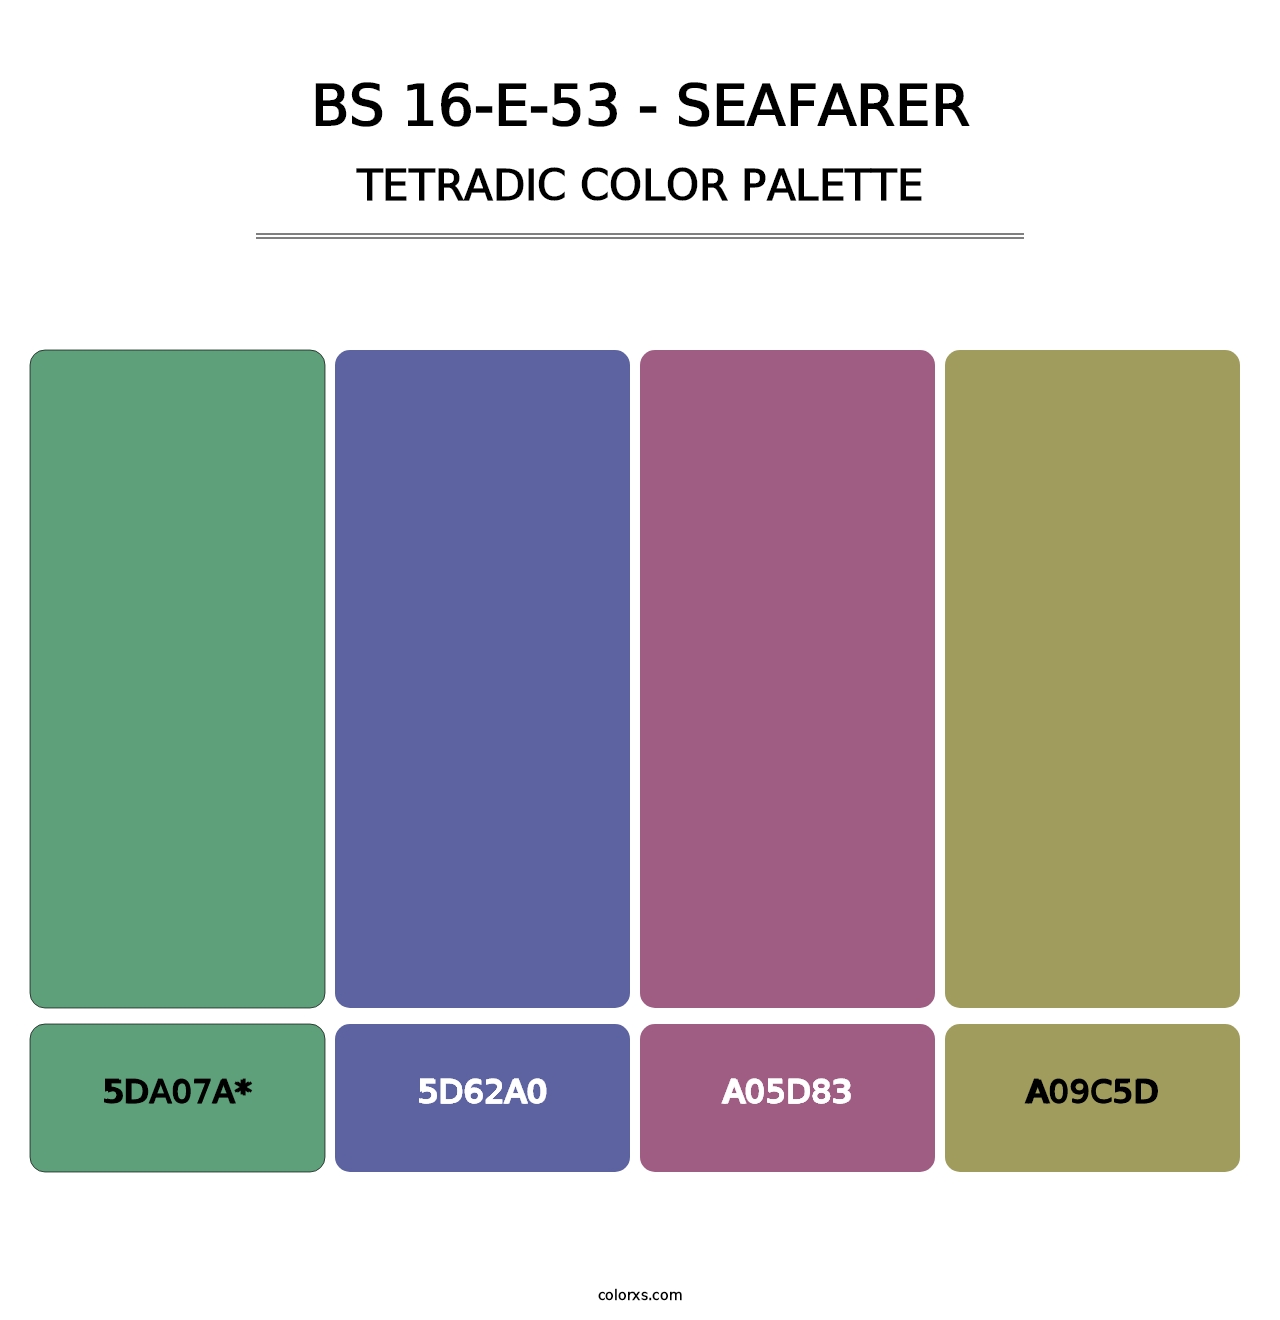 BS 16-E-53 - Seafarer - Tetradic Color Palette